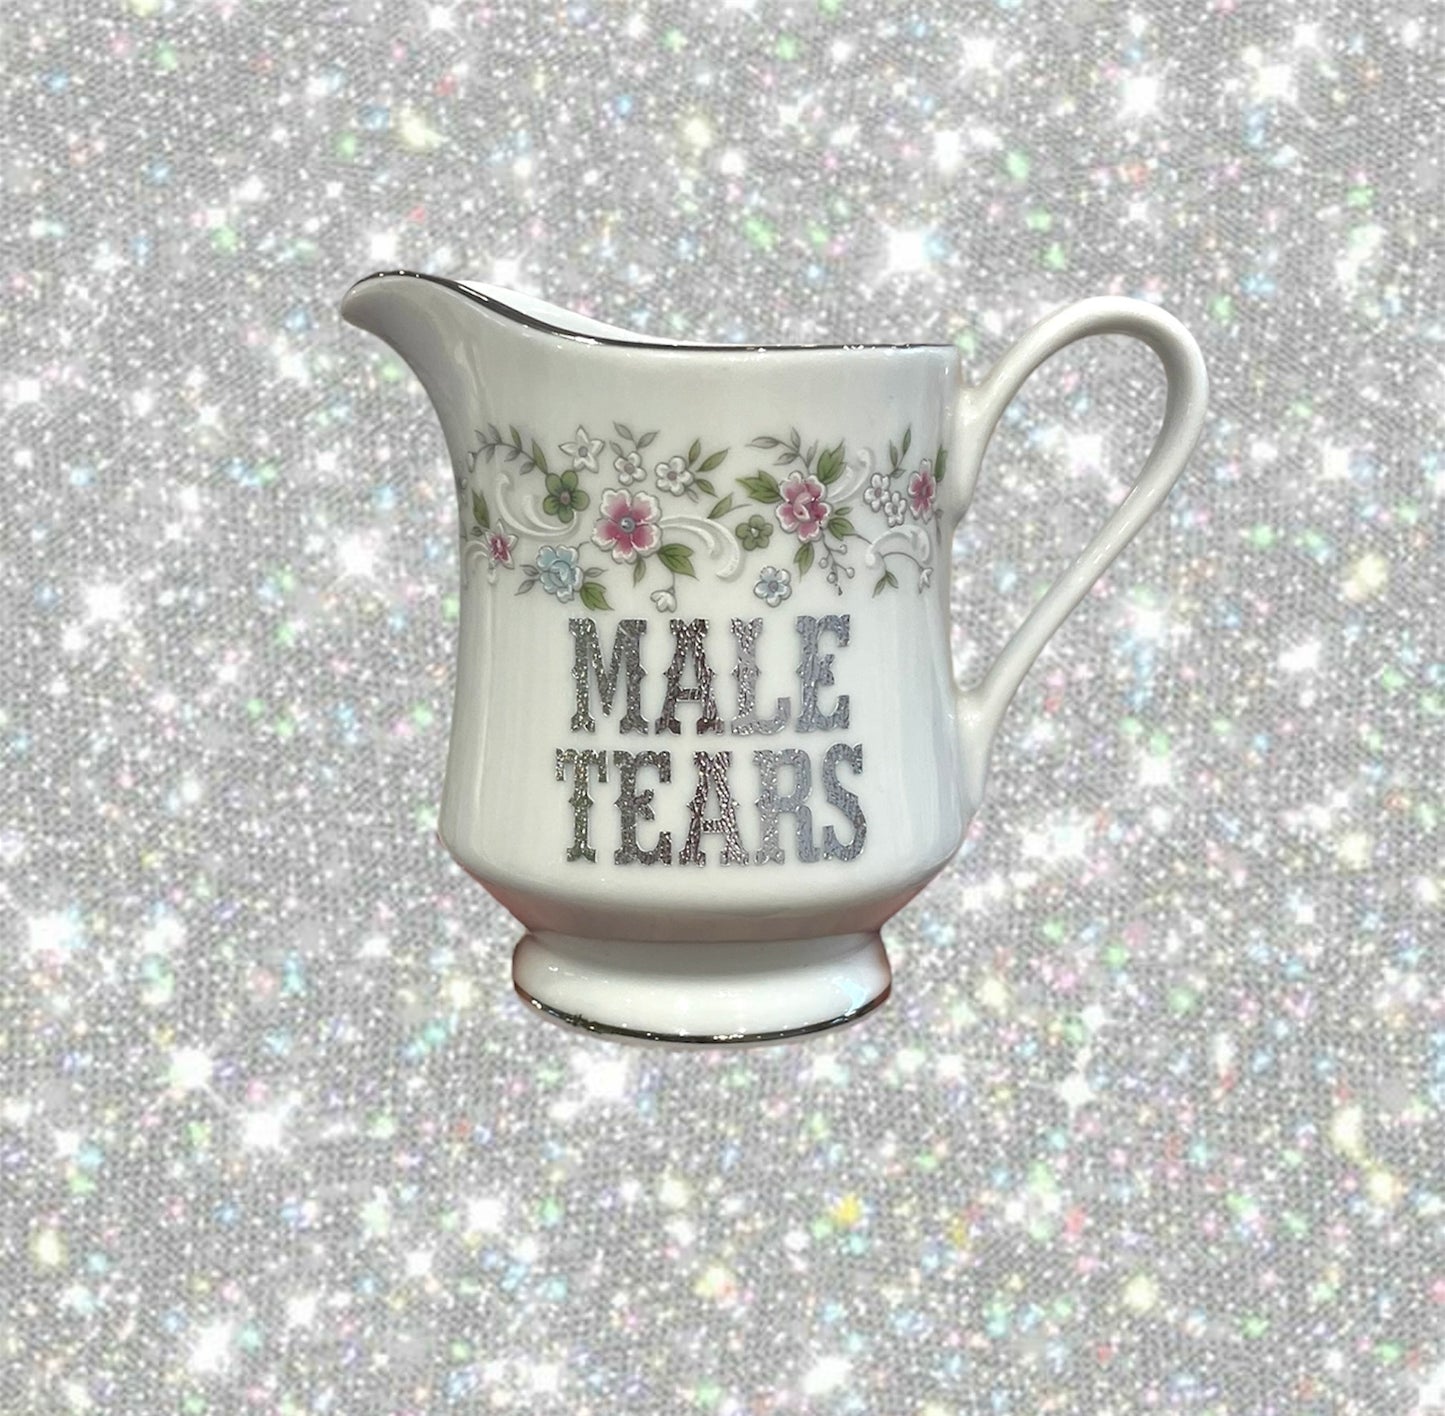 "MALE TEARS" CREAMER CUP